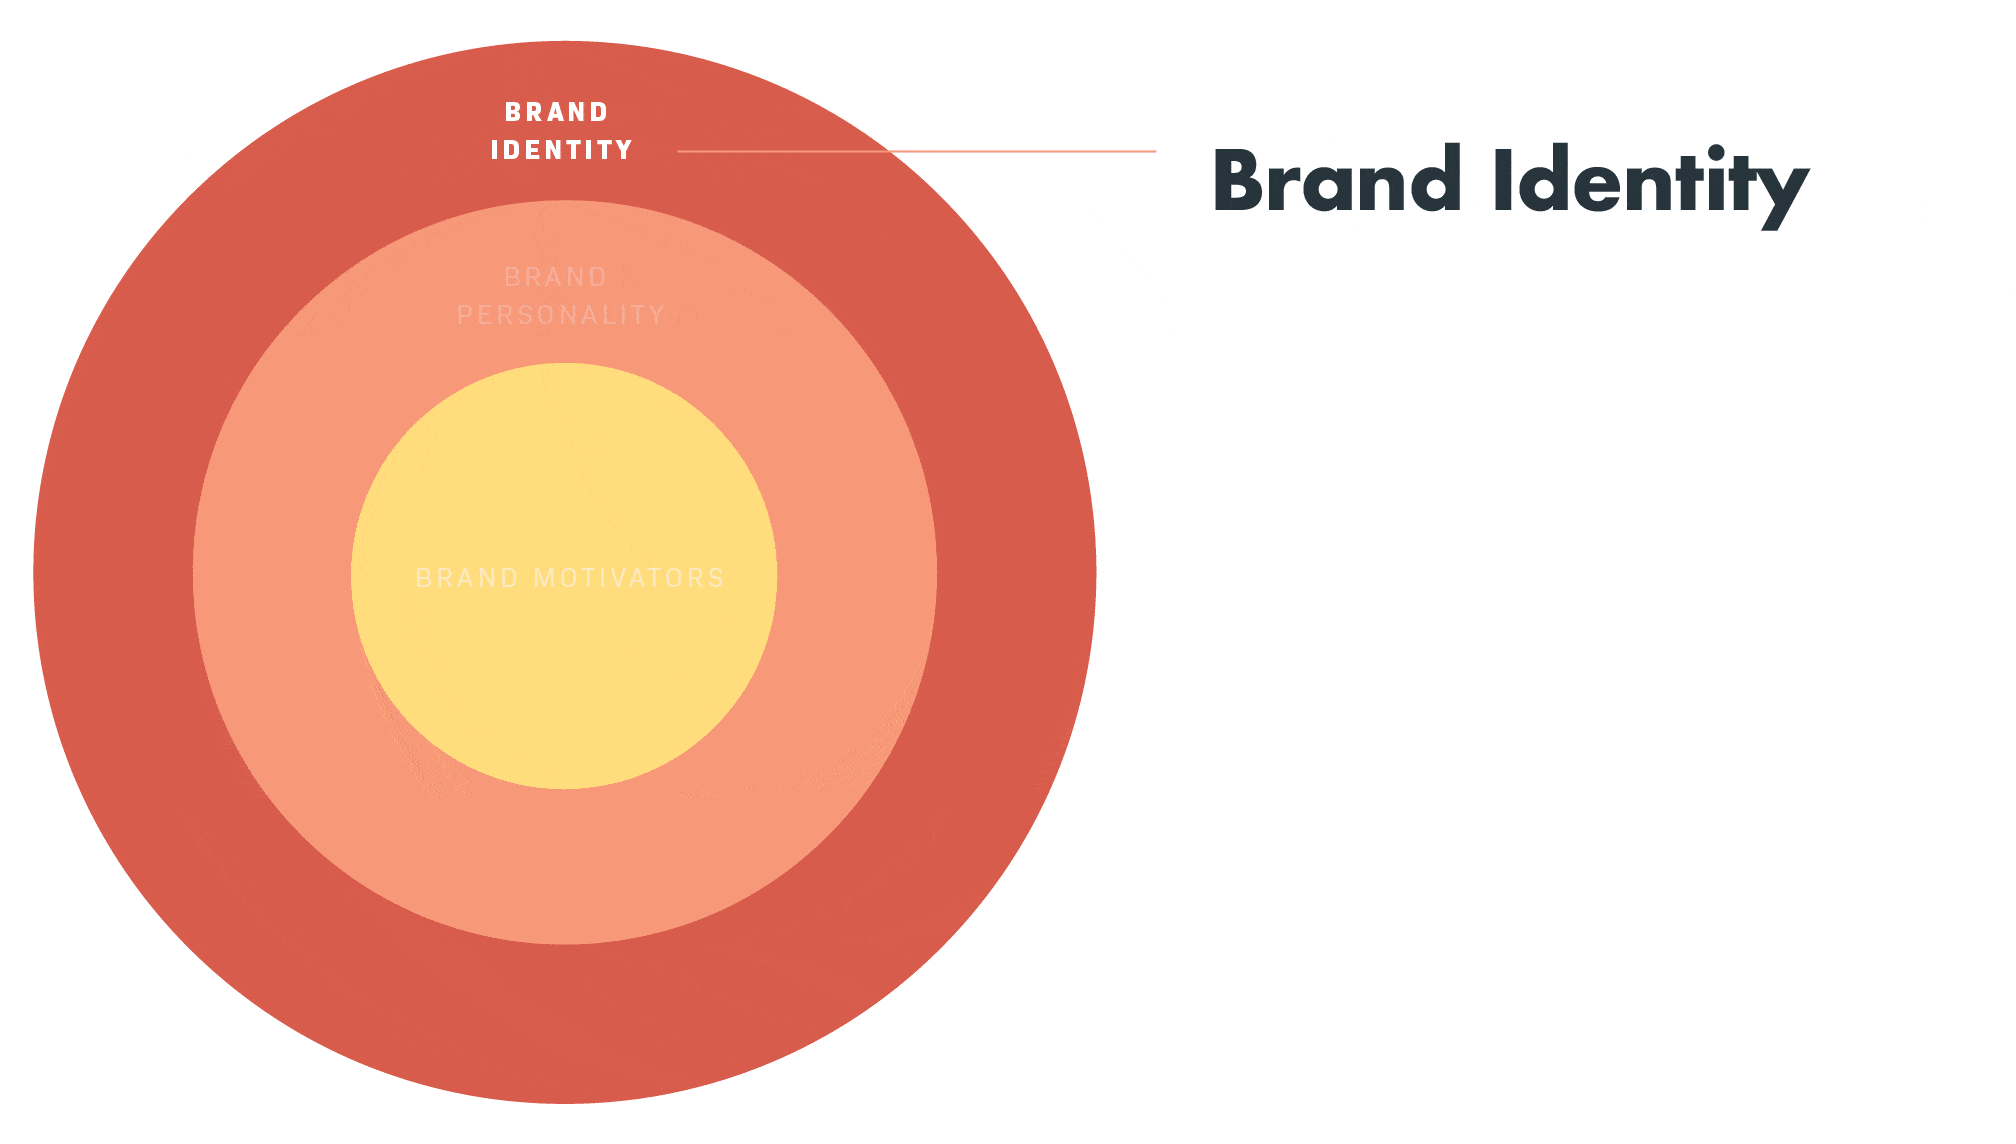 Brand Identity, Brand Personality, Brand Motivators